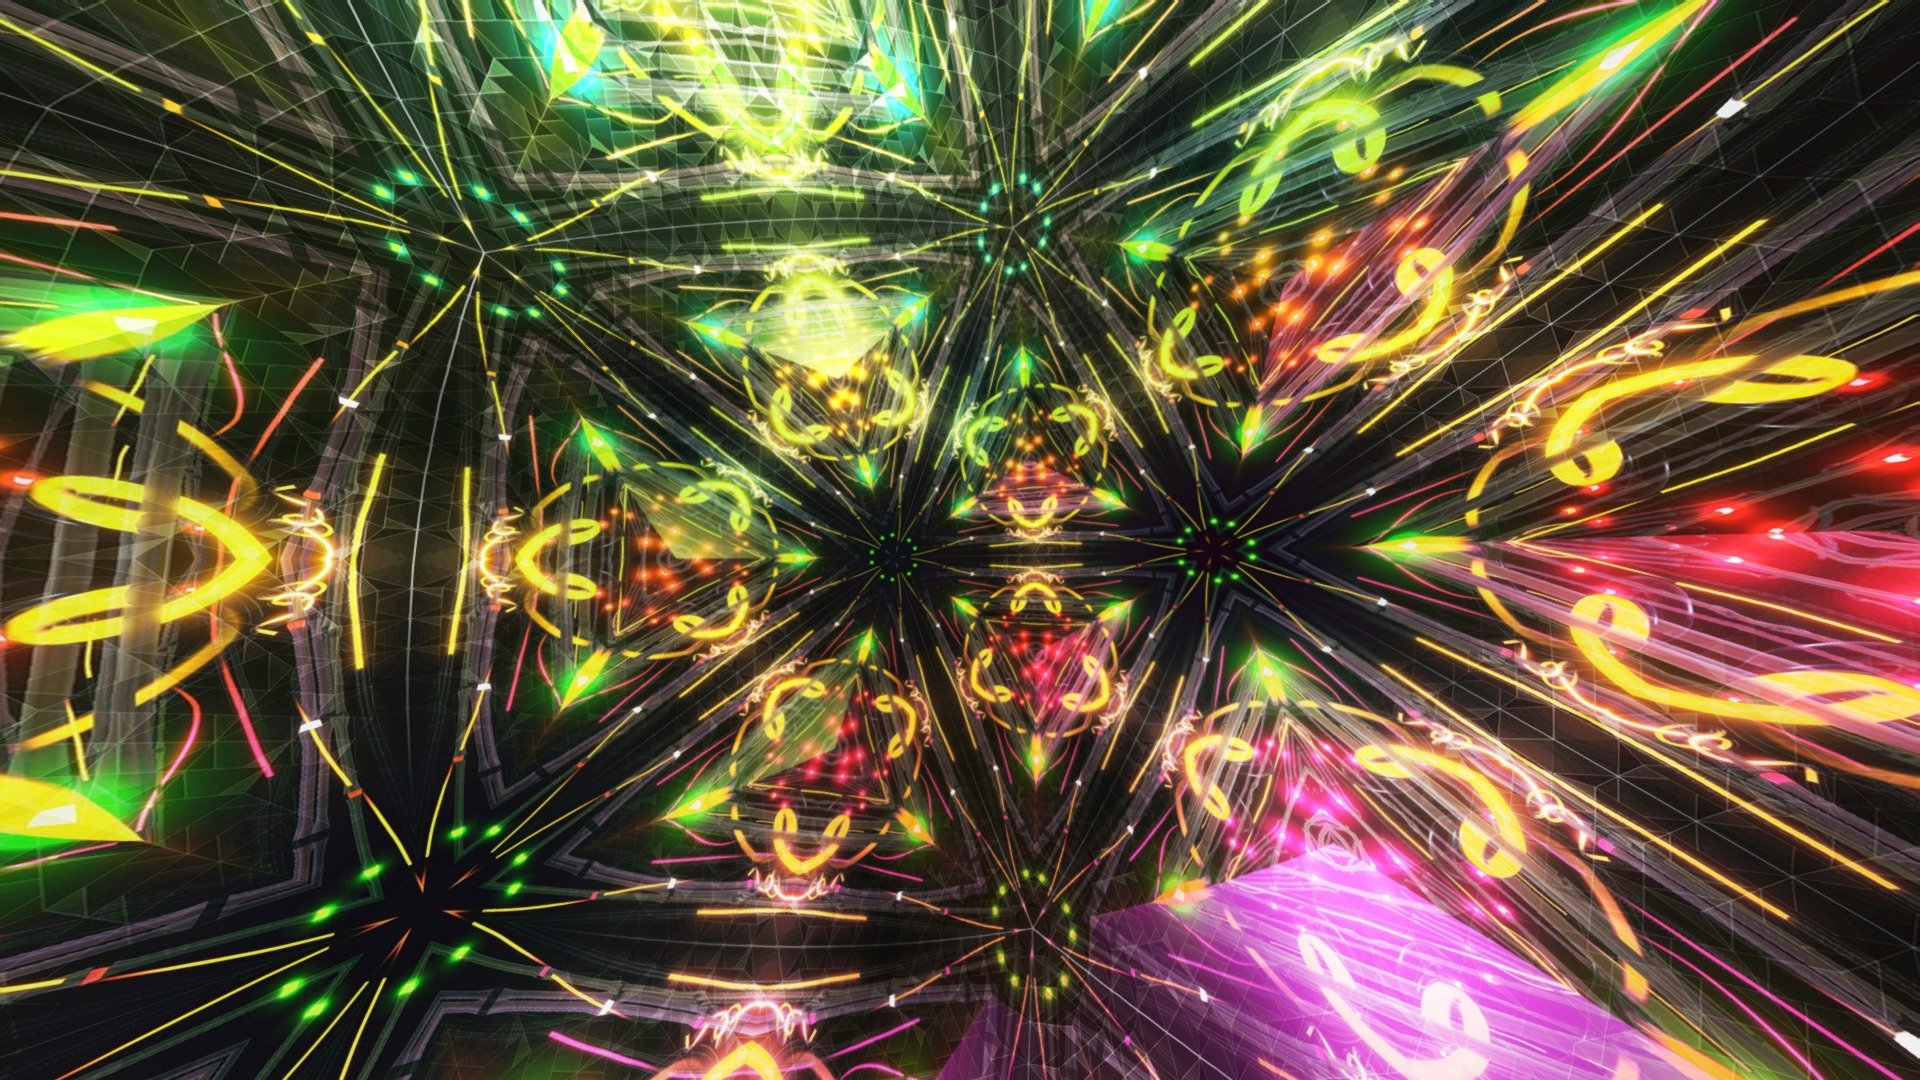 E. of the Neon Spheres - Core Triangulation